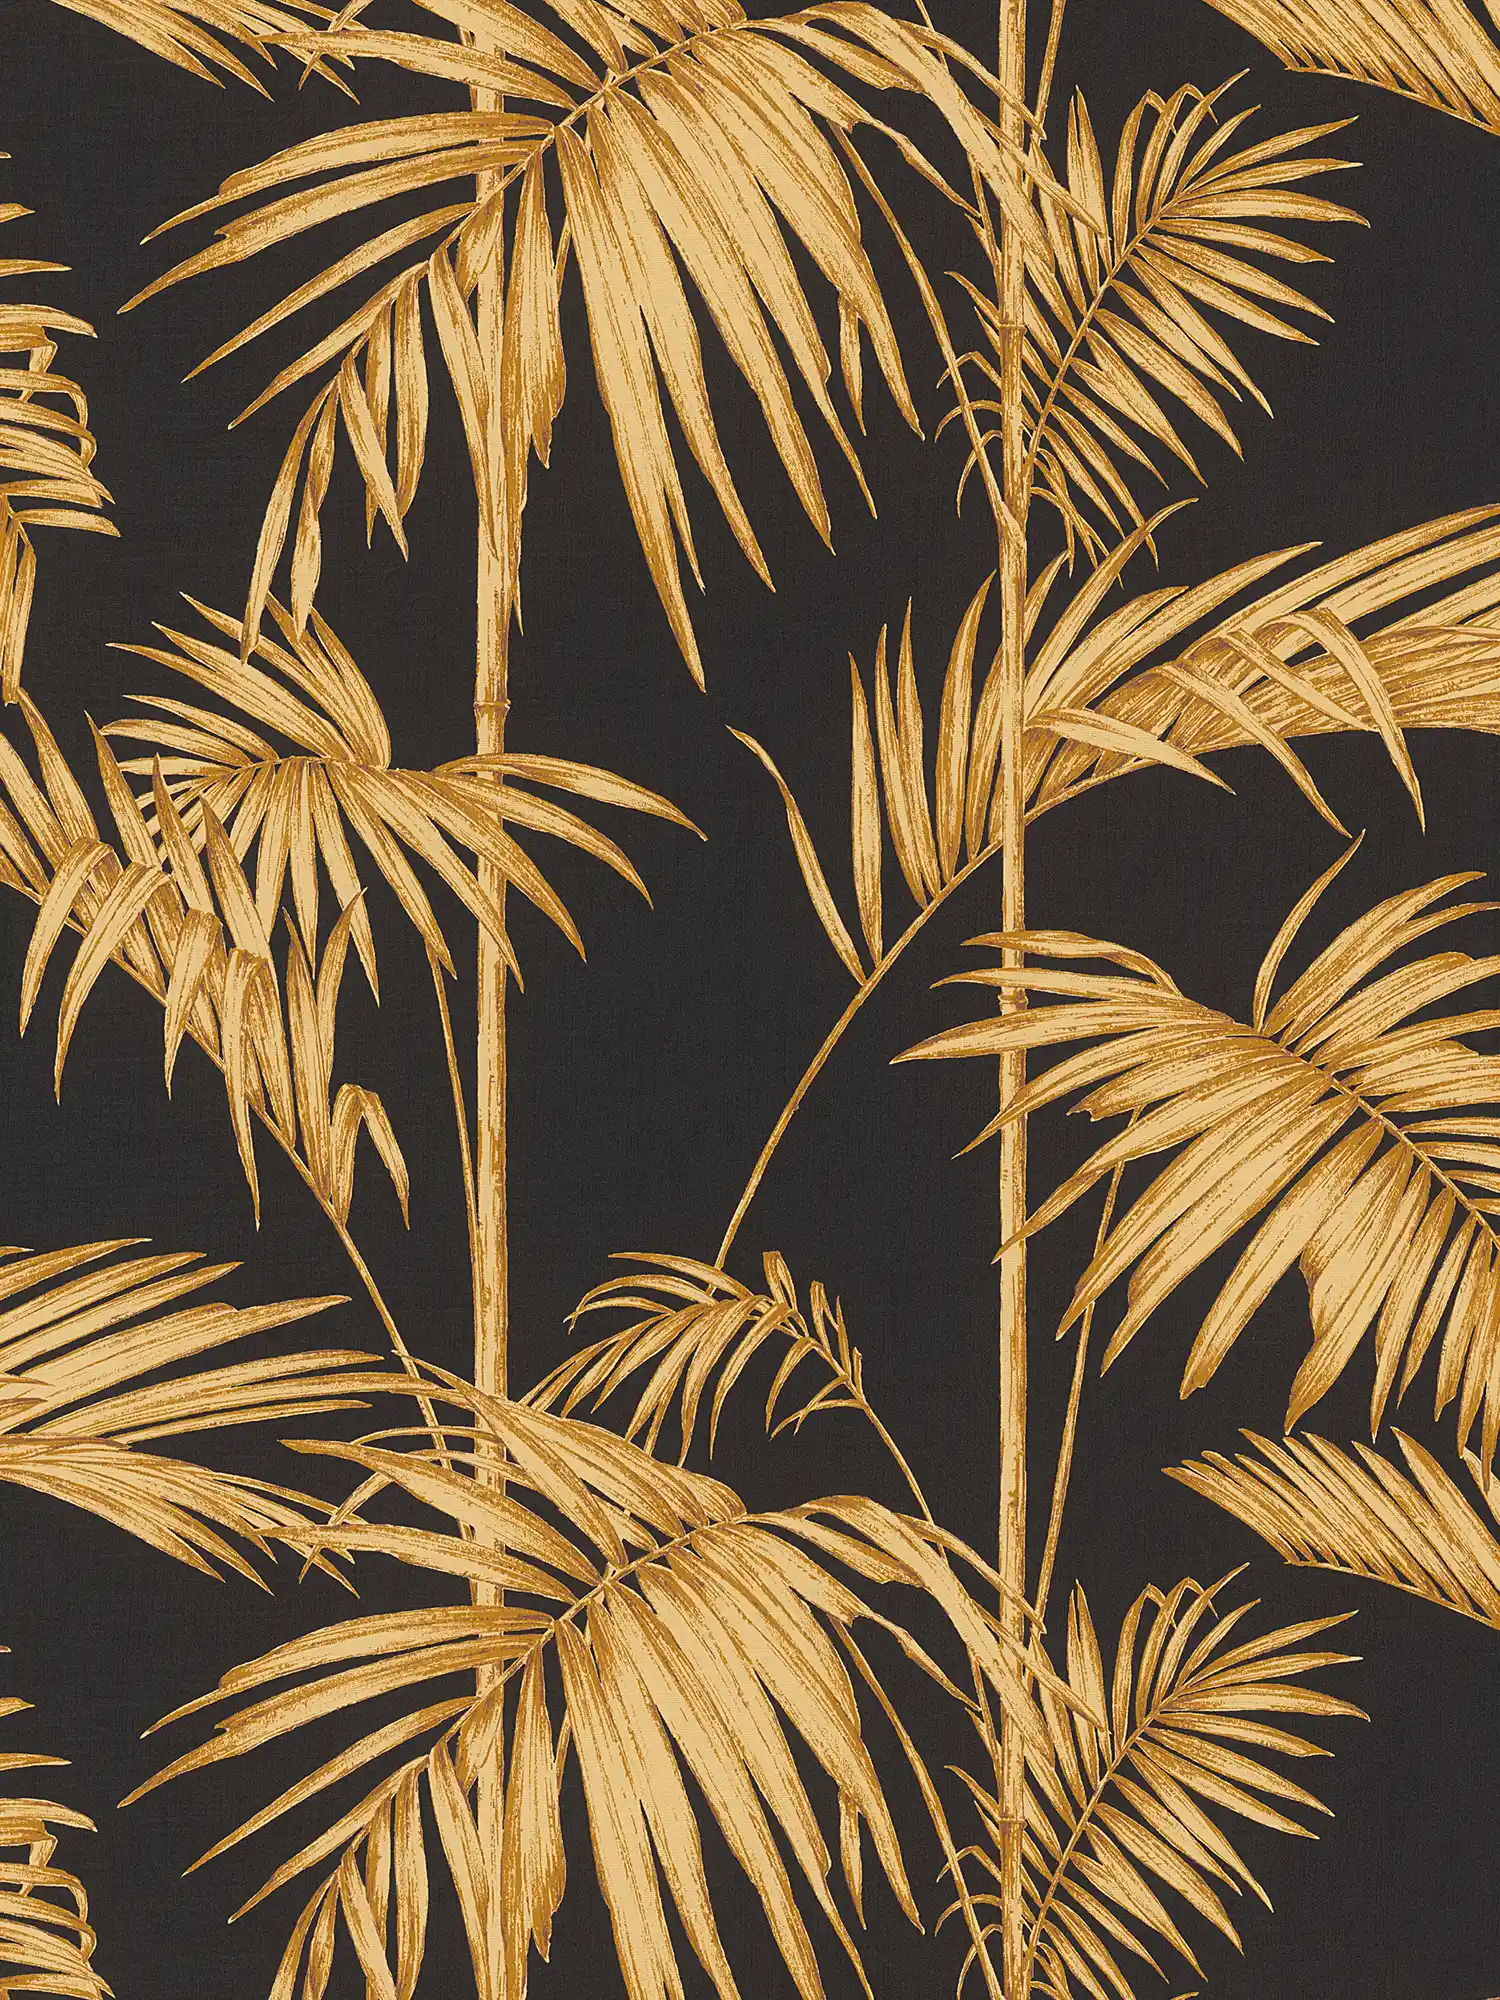 Nature wallpaper palm leaves, bamboo - gold, black, orange
